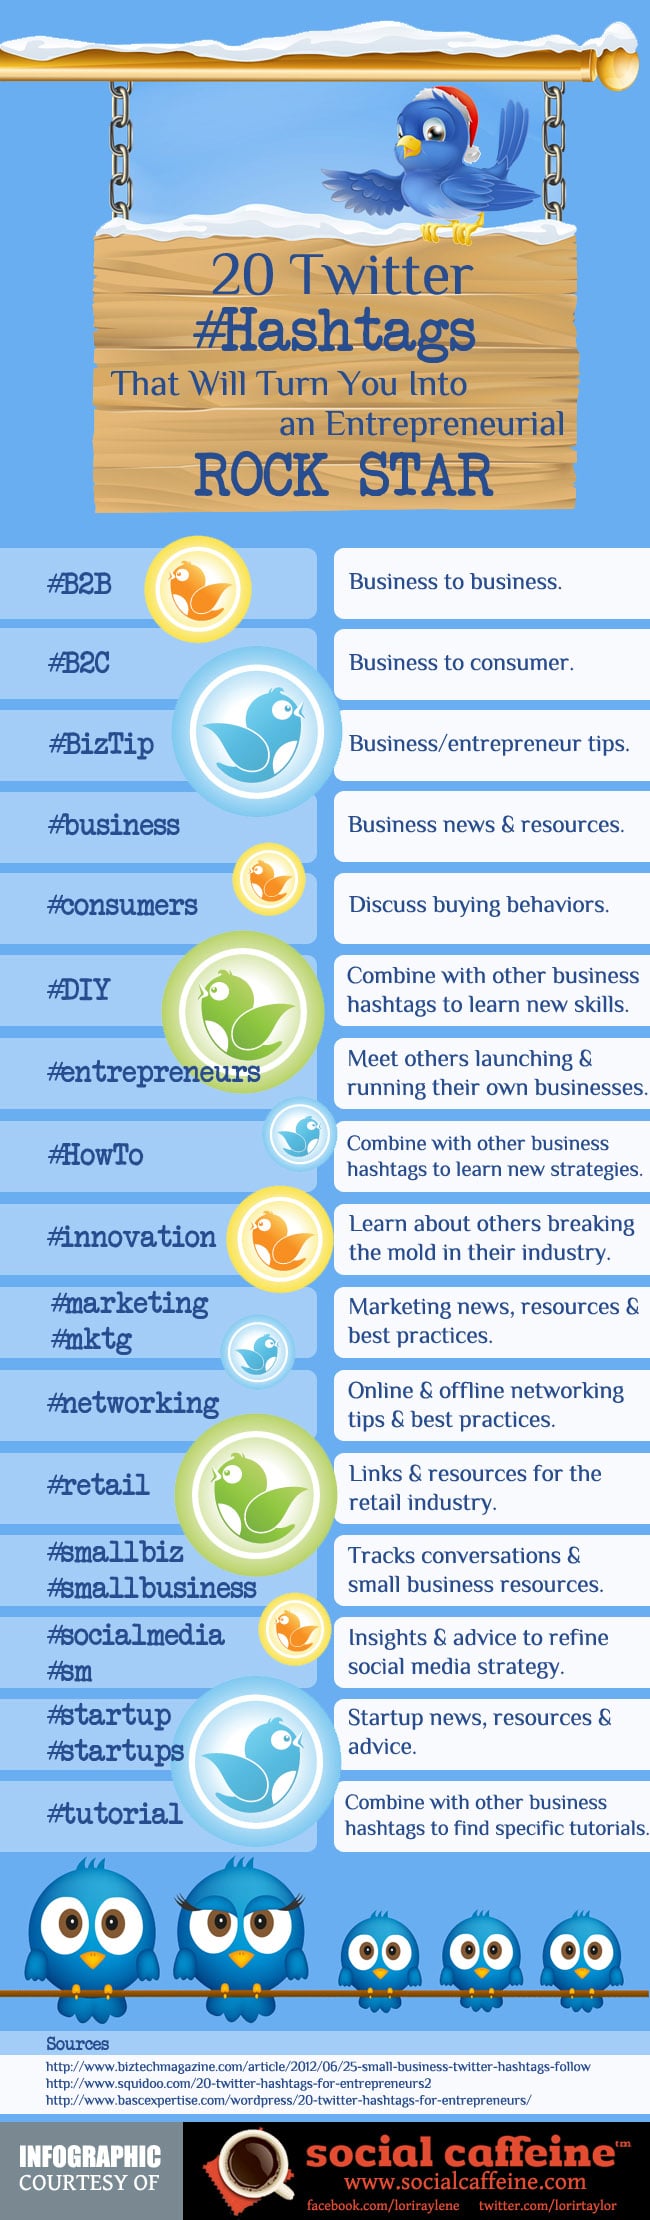 20-entrepreneurial-twitter-hashtags-infographic